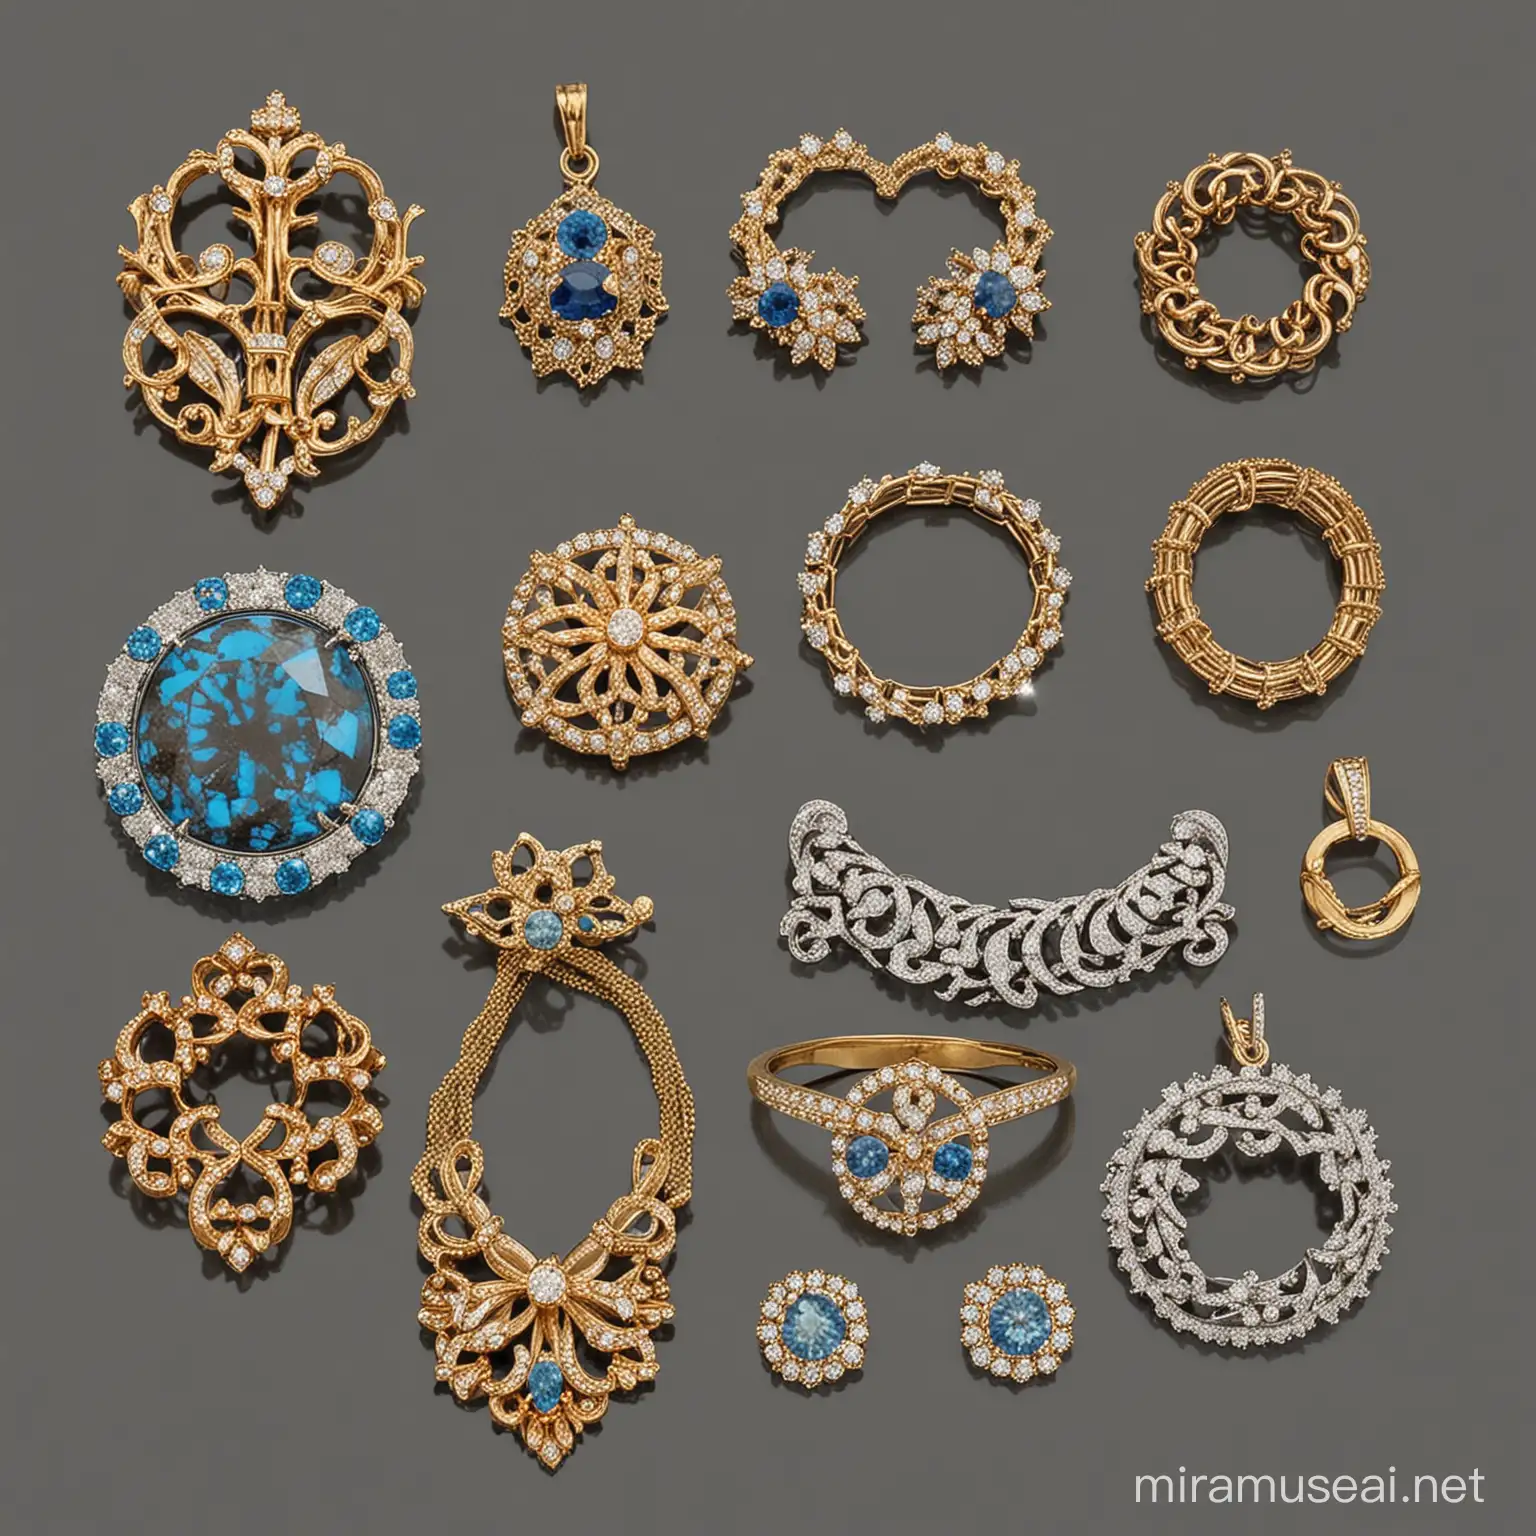 Elegant Gemstone Necklaces and Dazzling Bracelets on Display